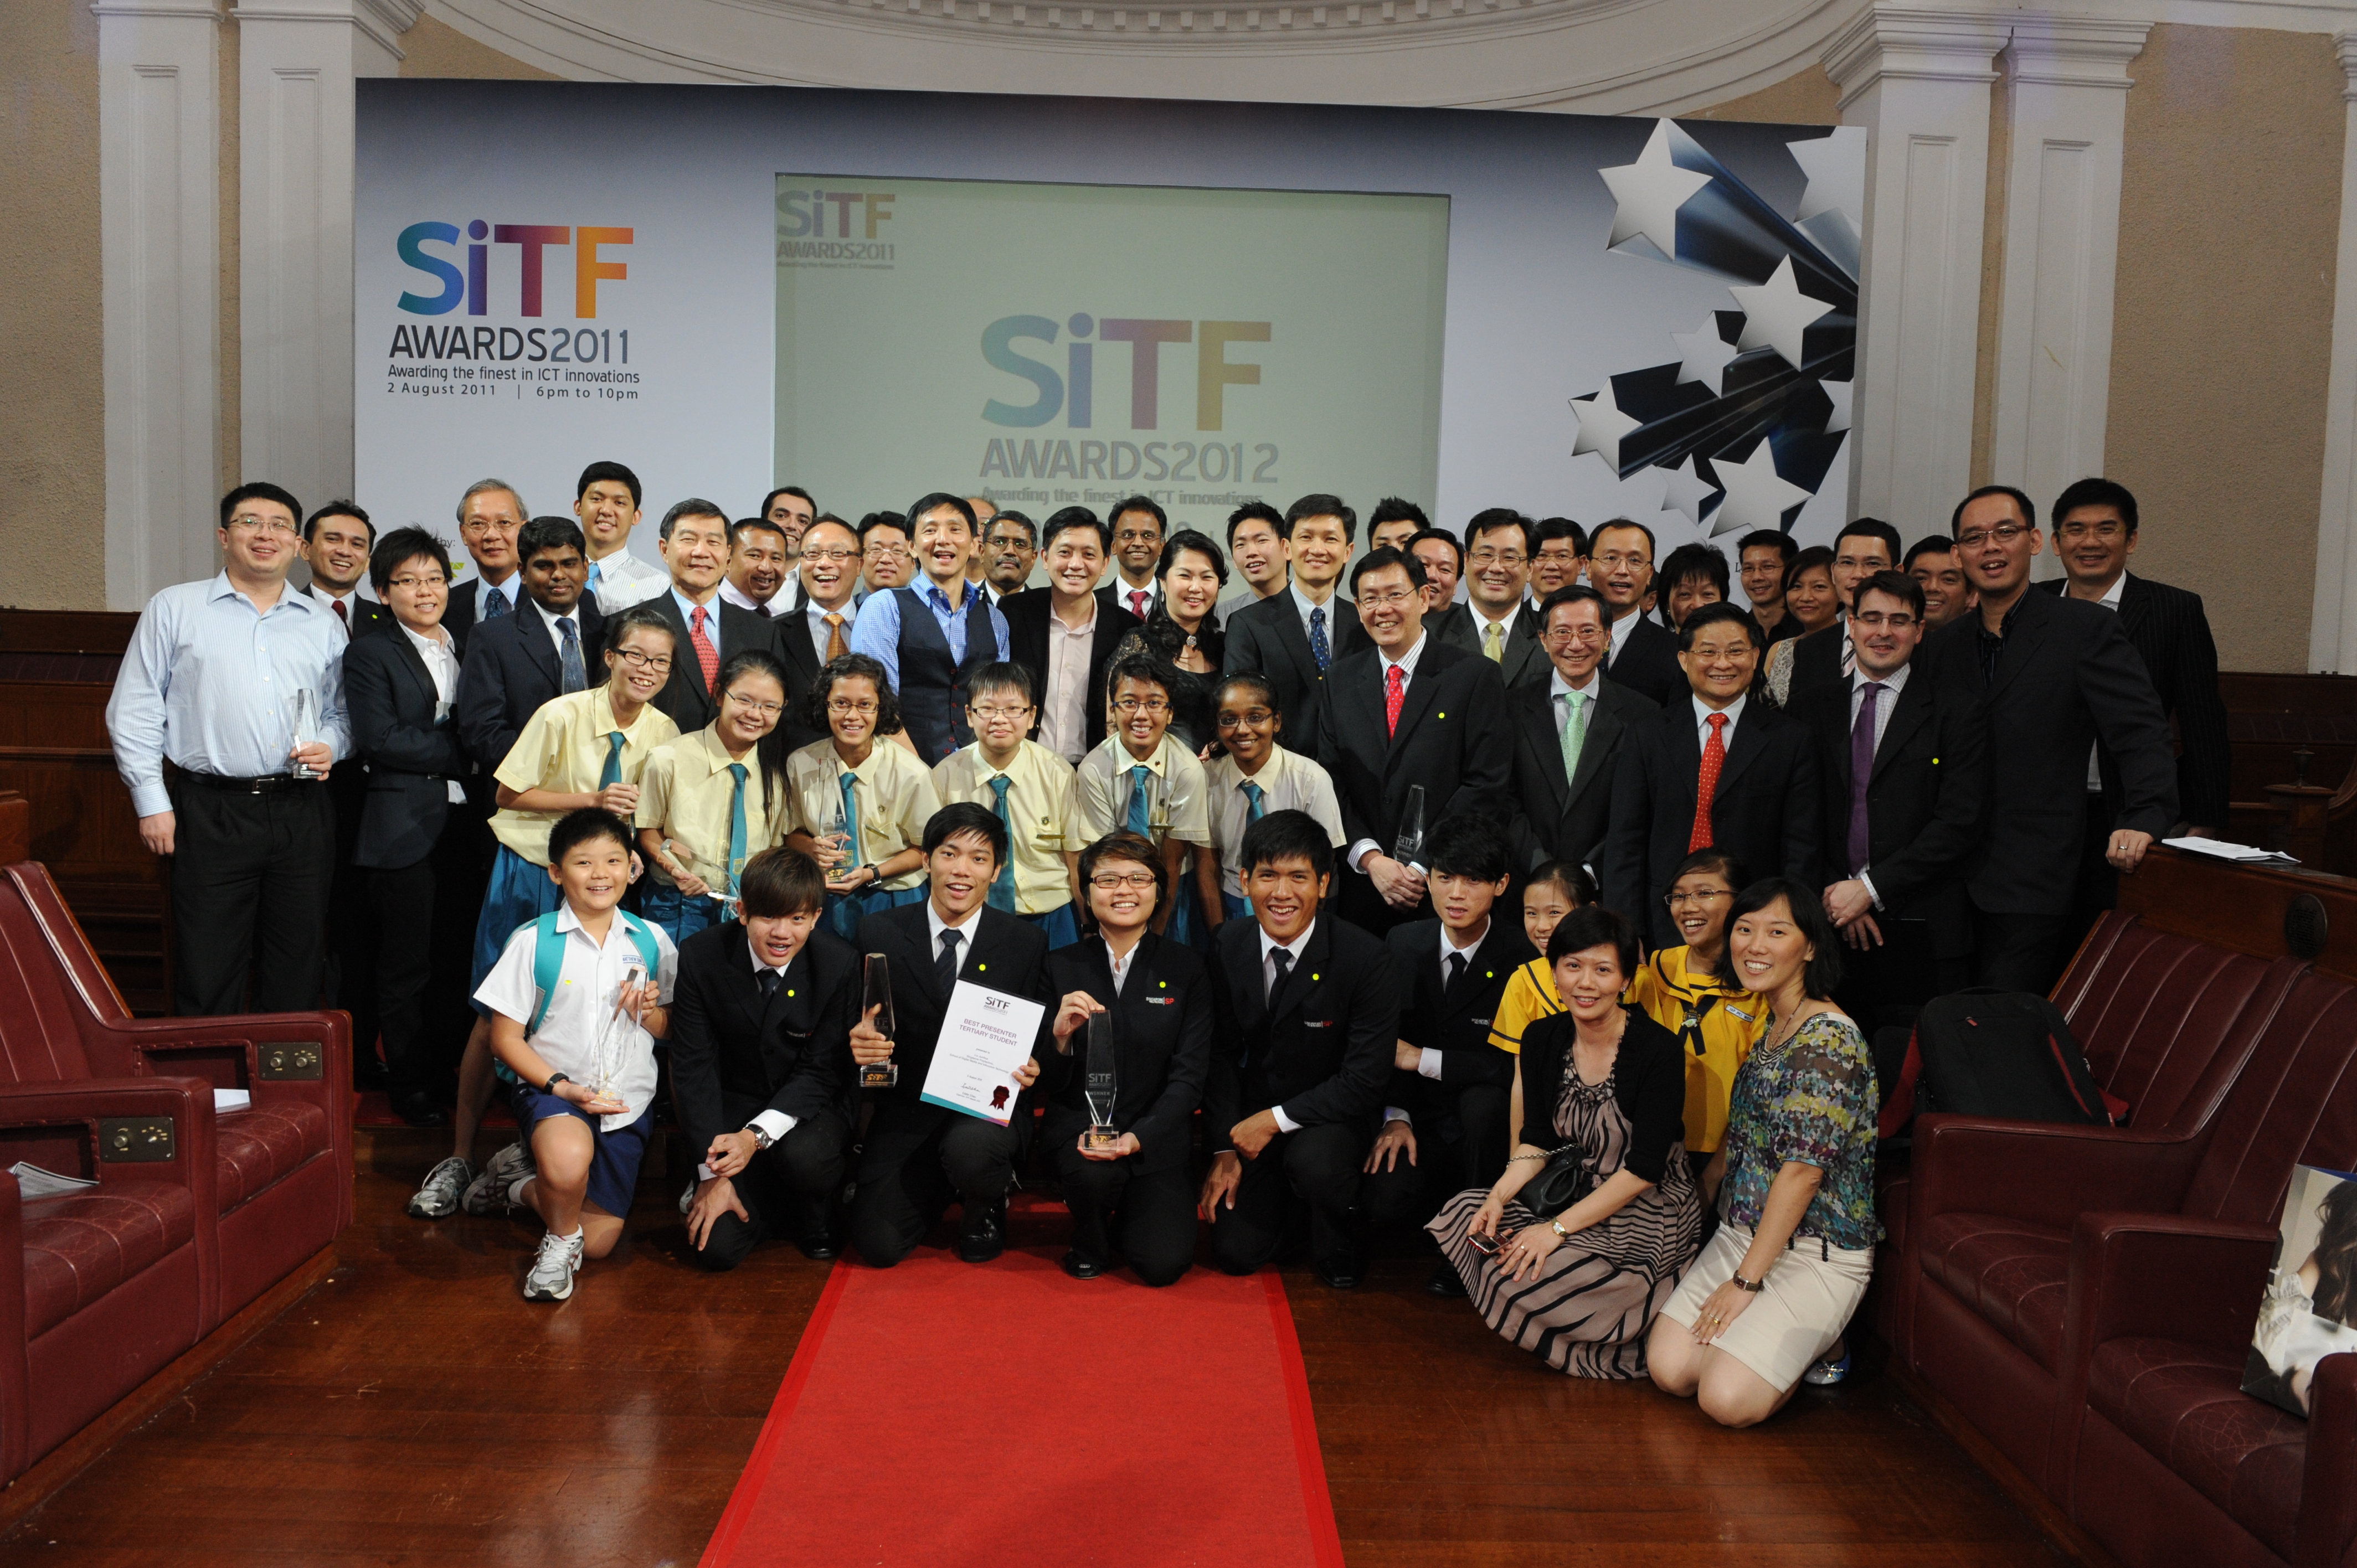 SiTF Awards 2011 - Winner Group Photo